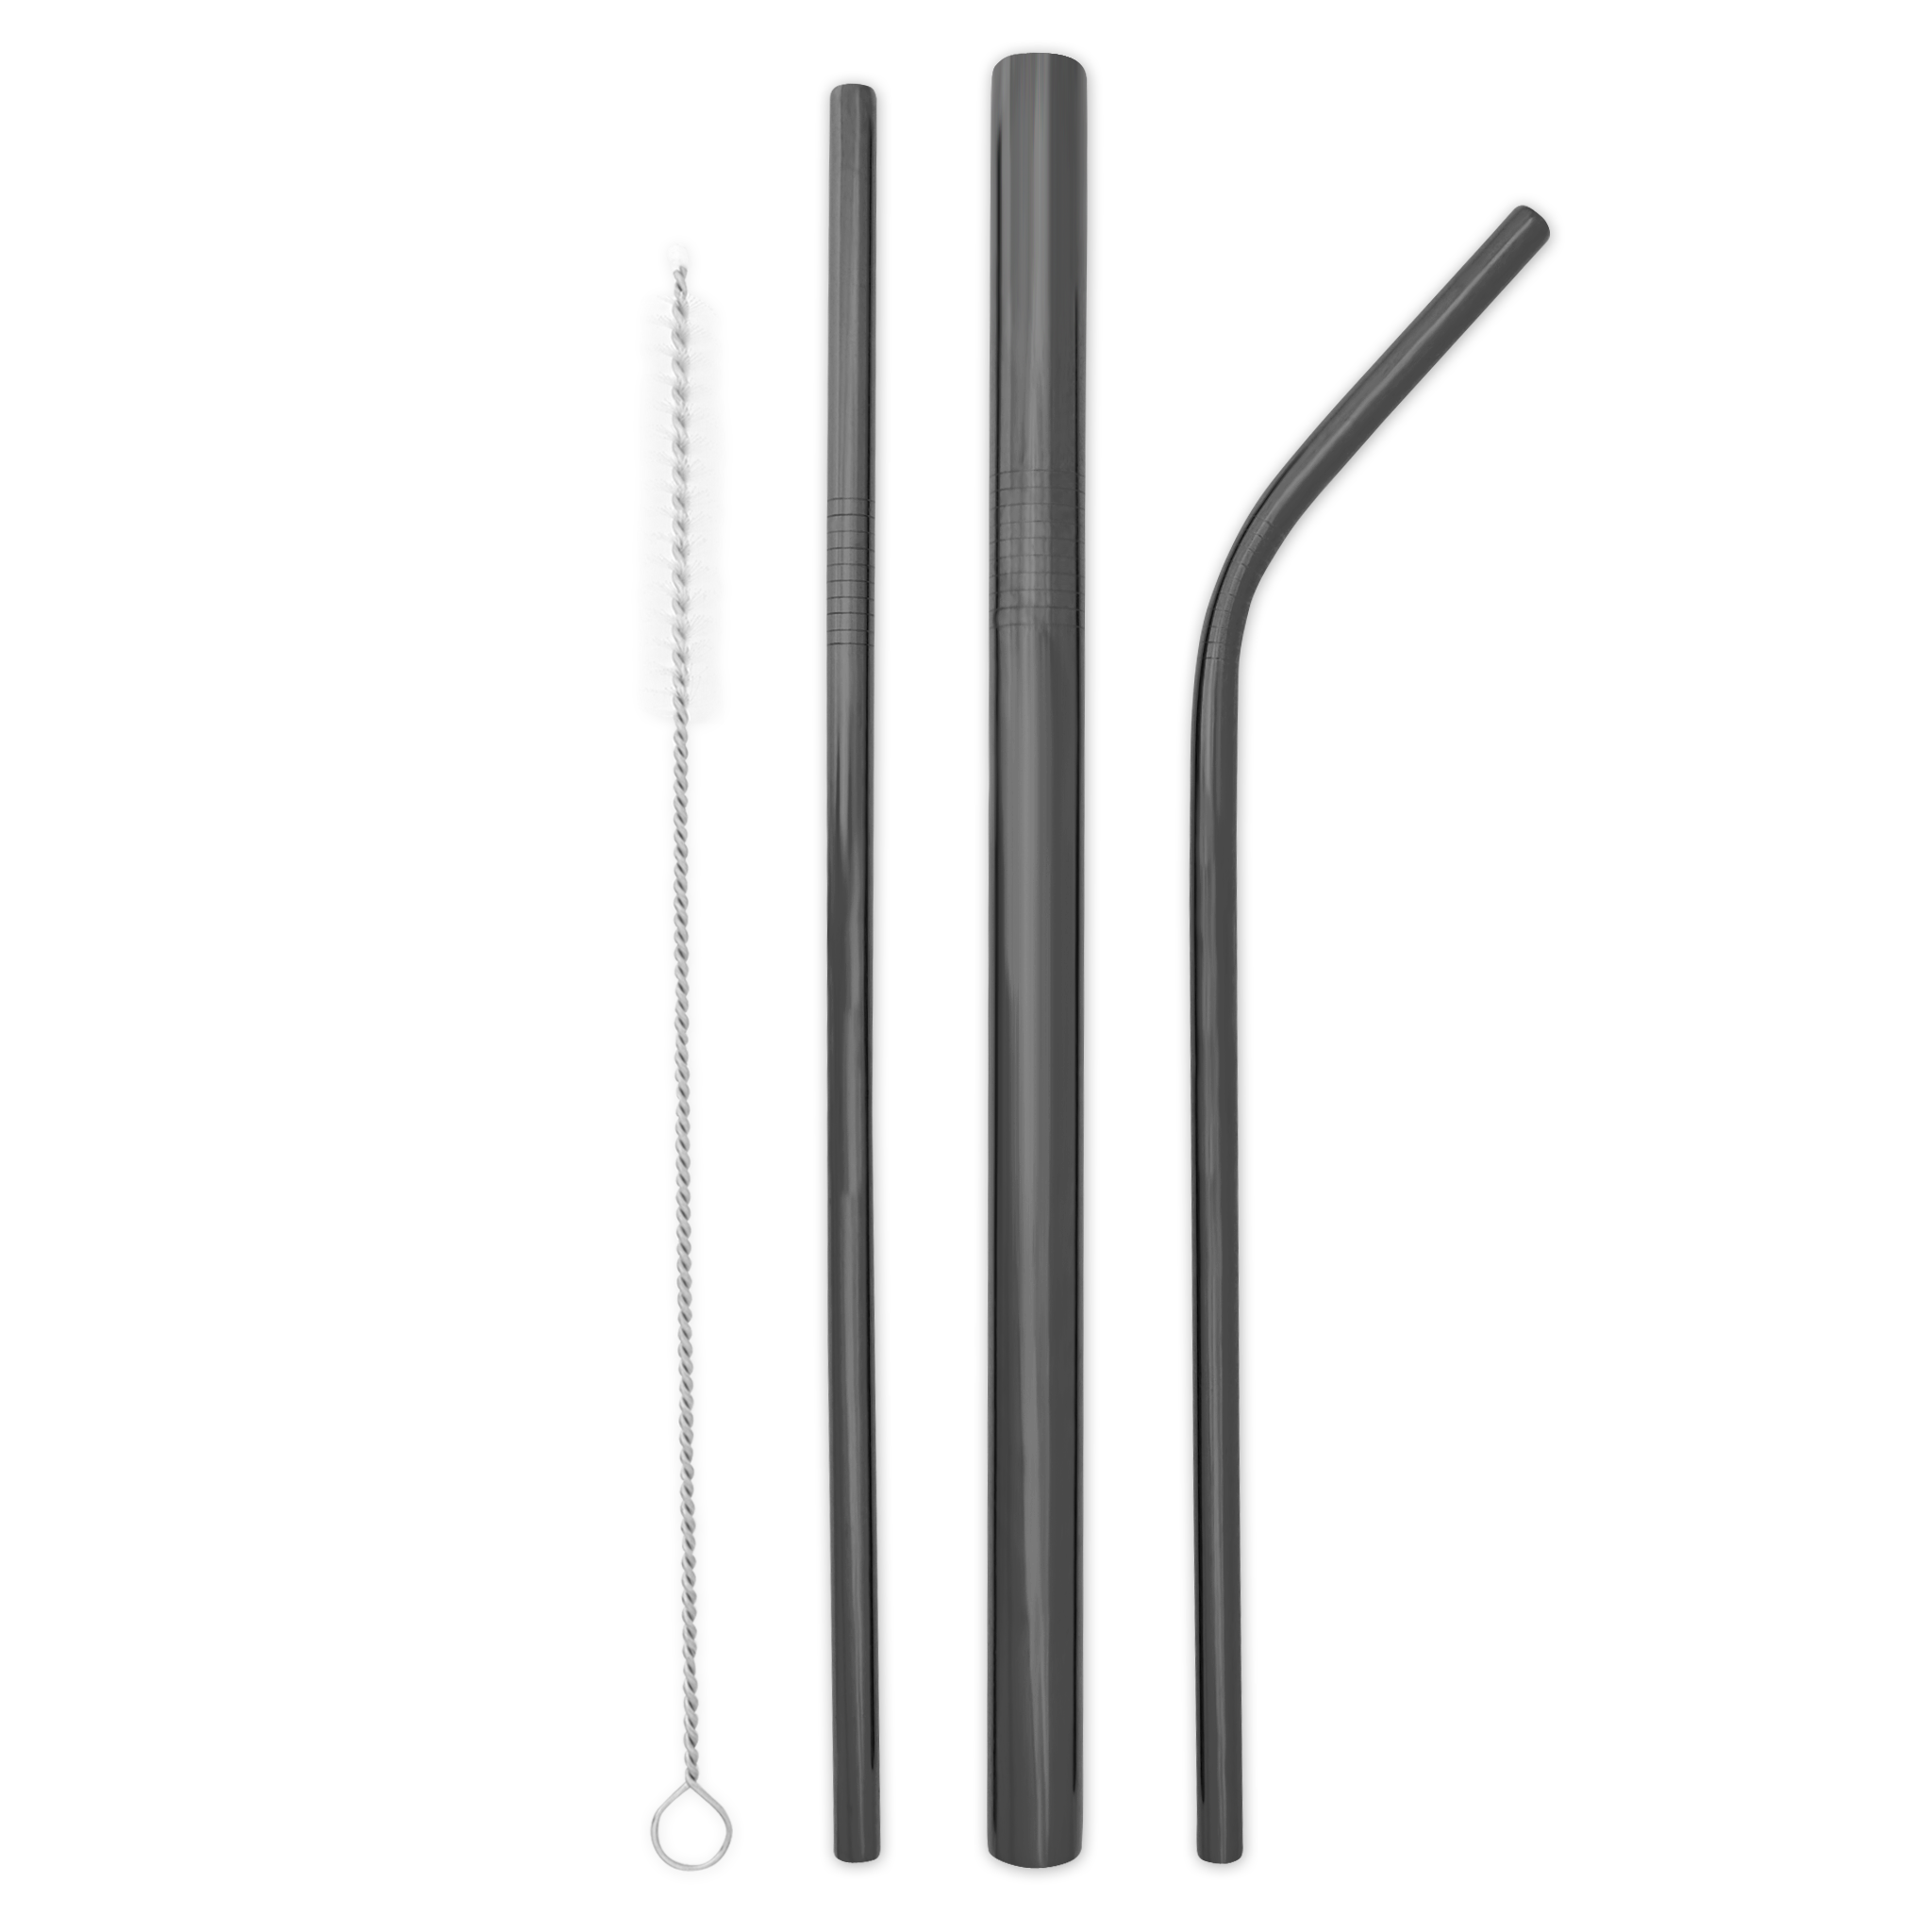 Triple Threat Stainless Steel Straws Box Set (Black)